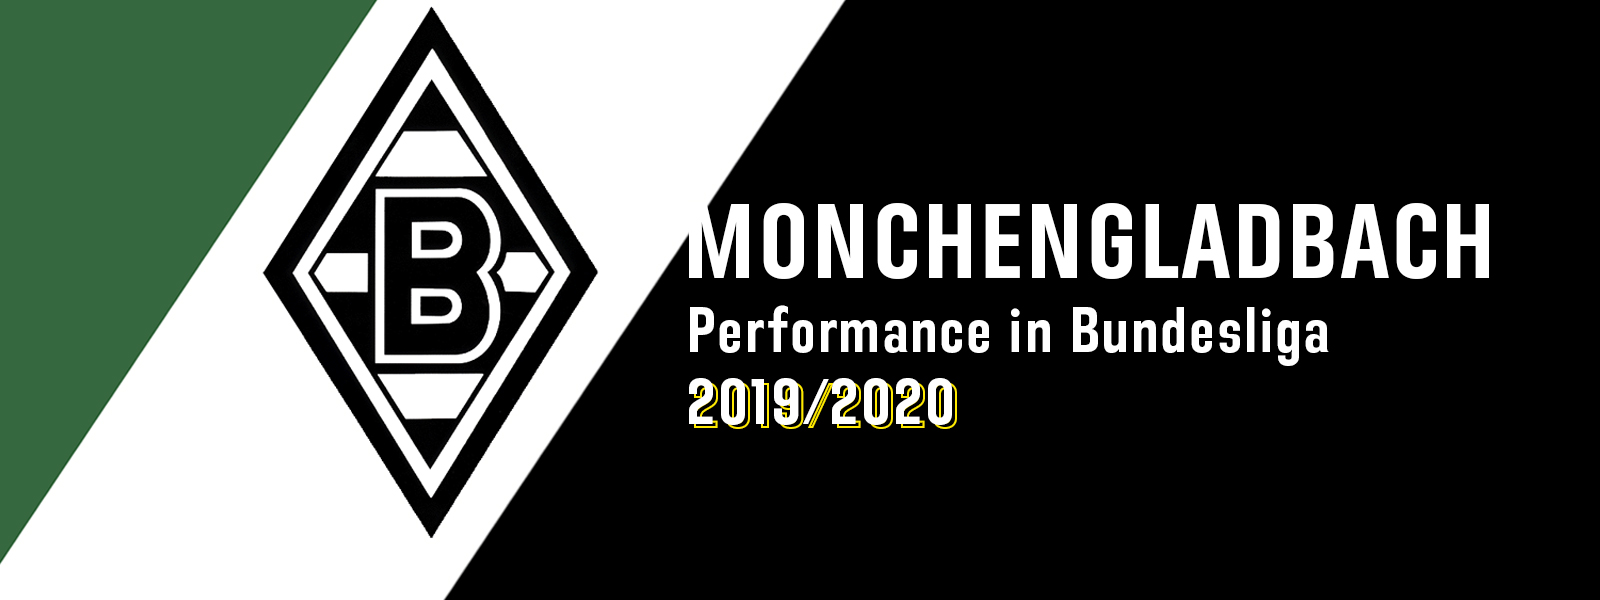 Monchengladbach Performance in Bundesliga 2019/2020